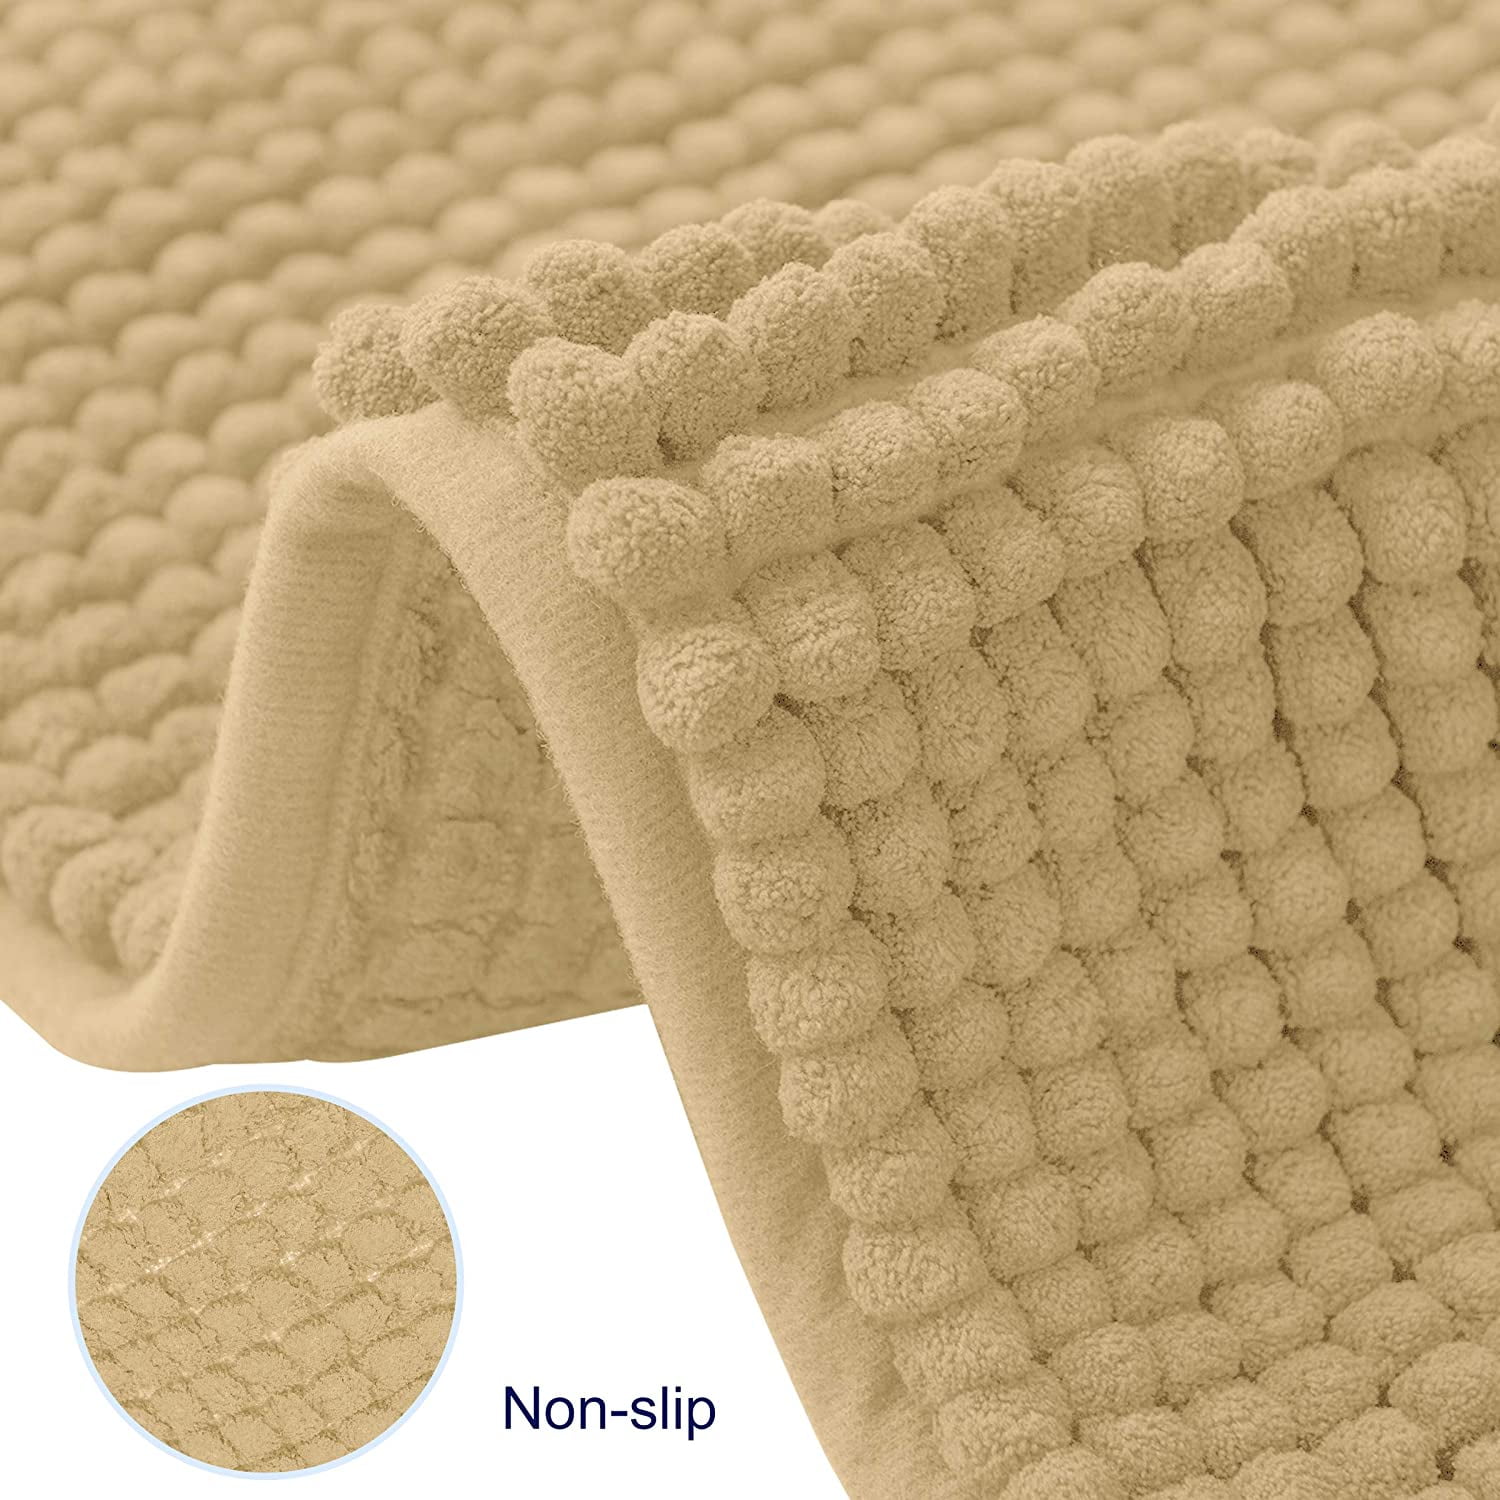 Subrtex Chenille Bathroom Rugs Non-Slip Absorbent Super Cozy Bathroom Mat Carpet (Coffee,20 inchx32 inch), Size: 20 x 32, Brown